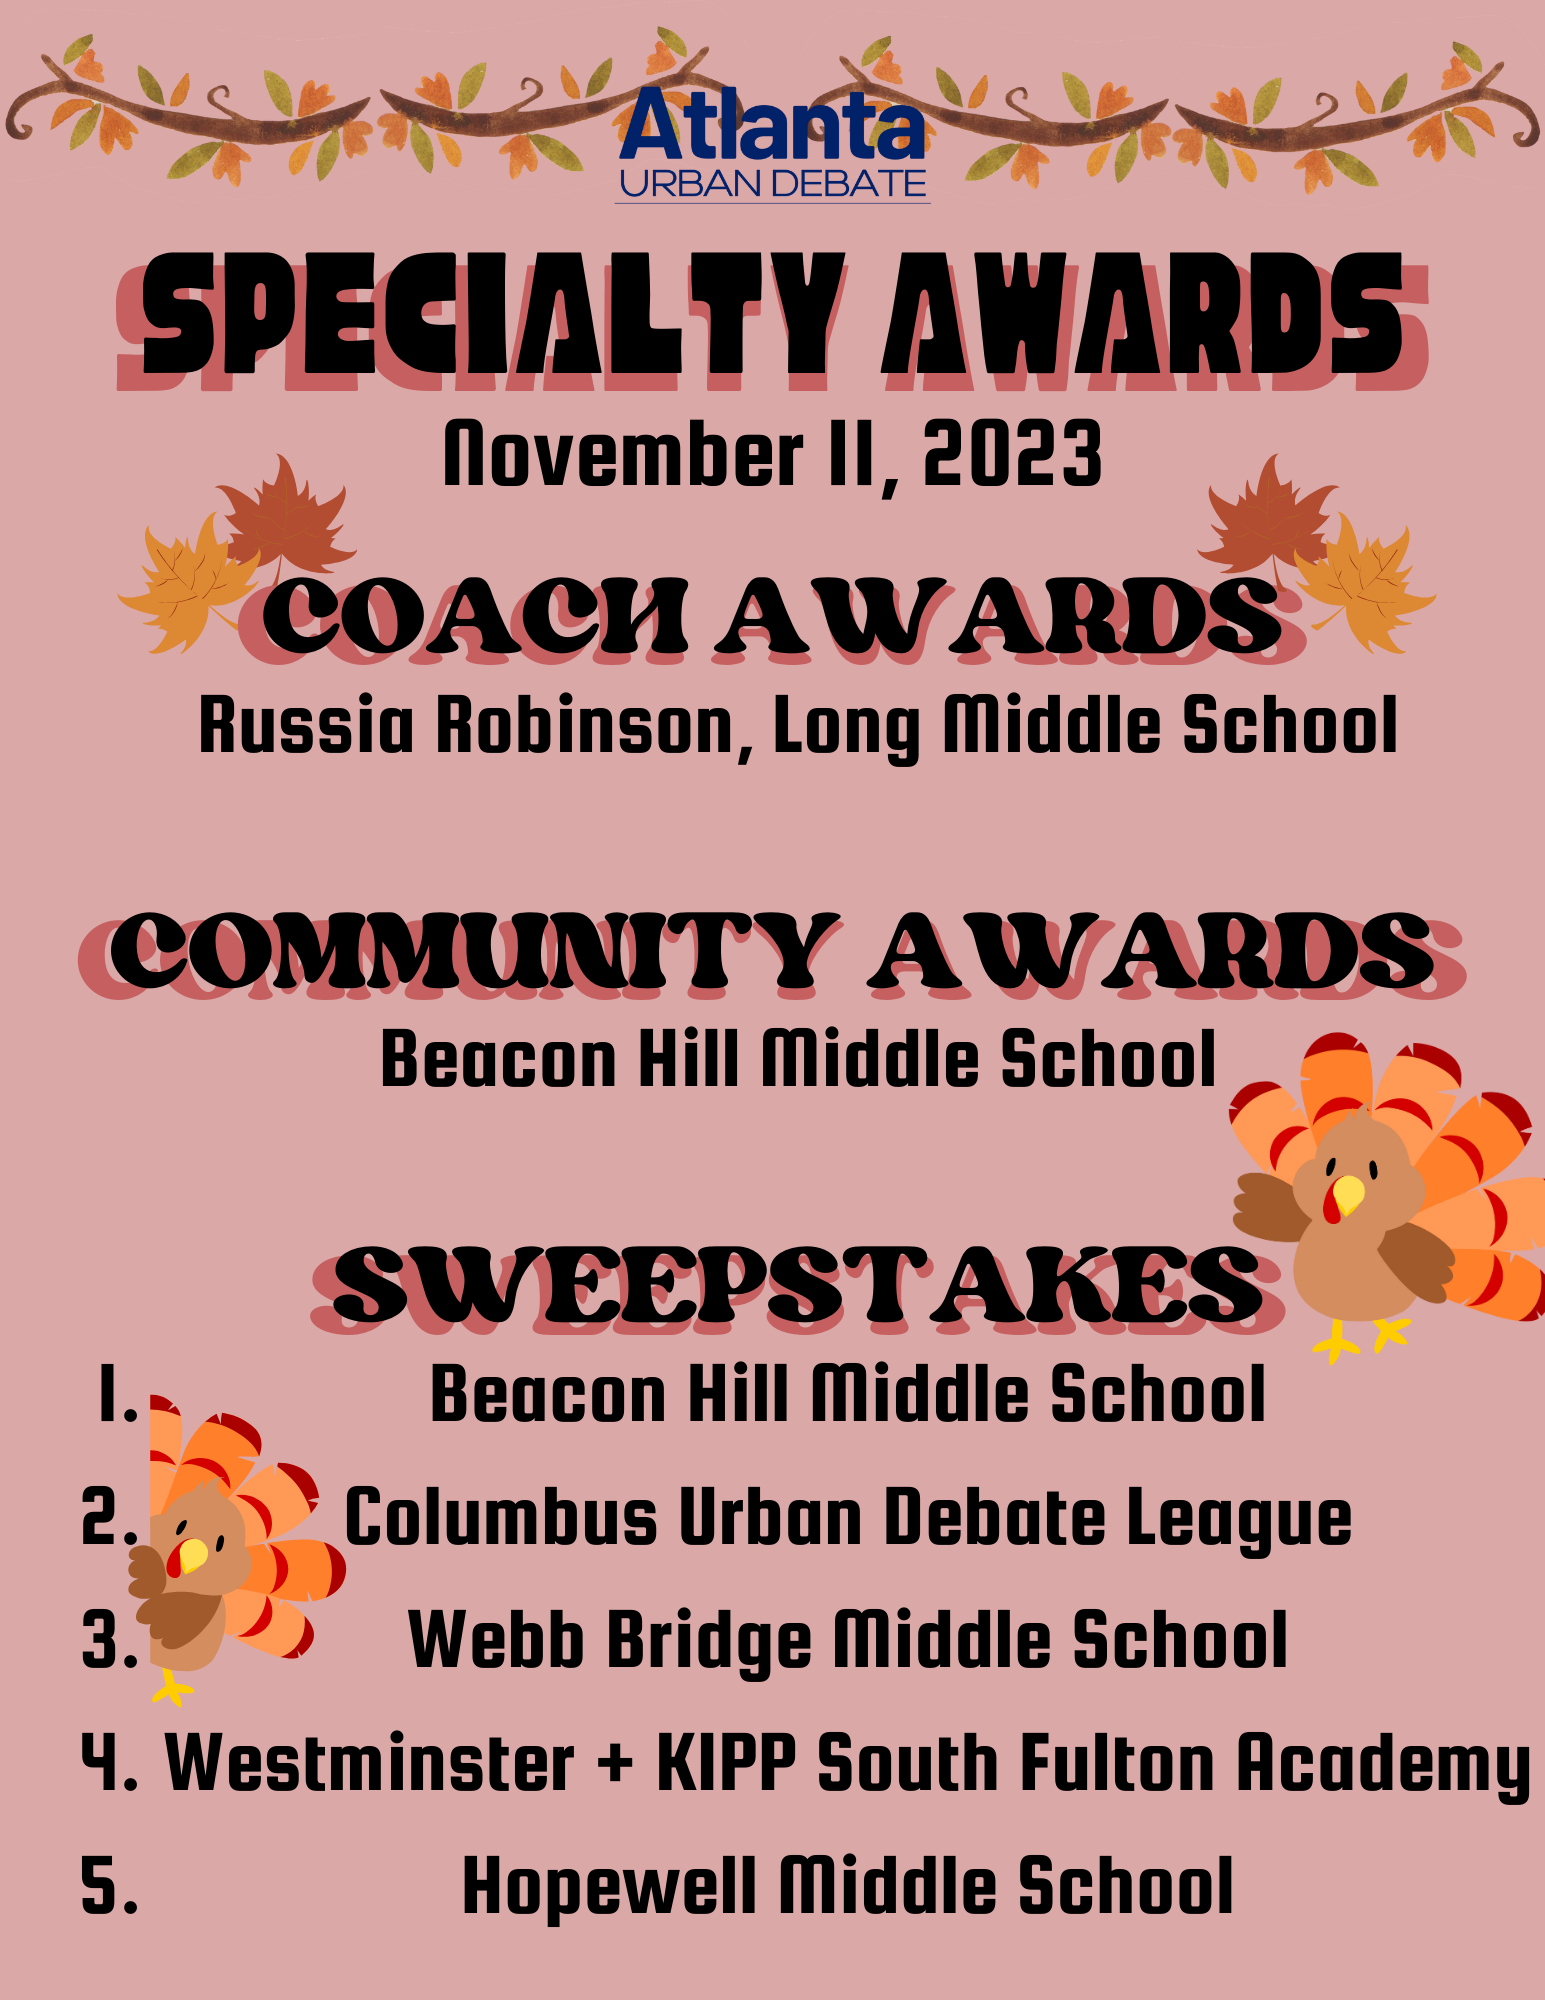 Nov 11, '23 Specialty Awards.png